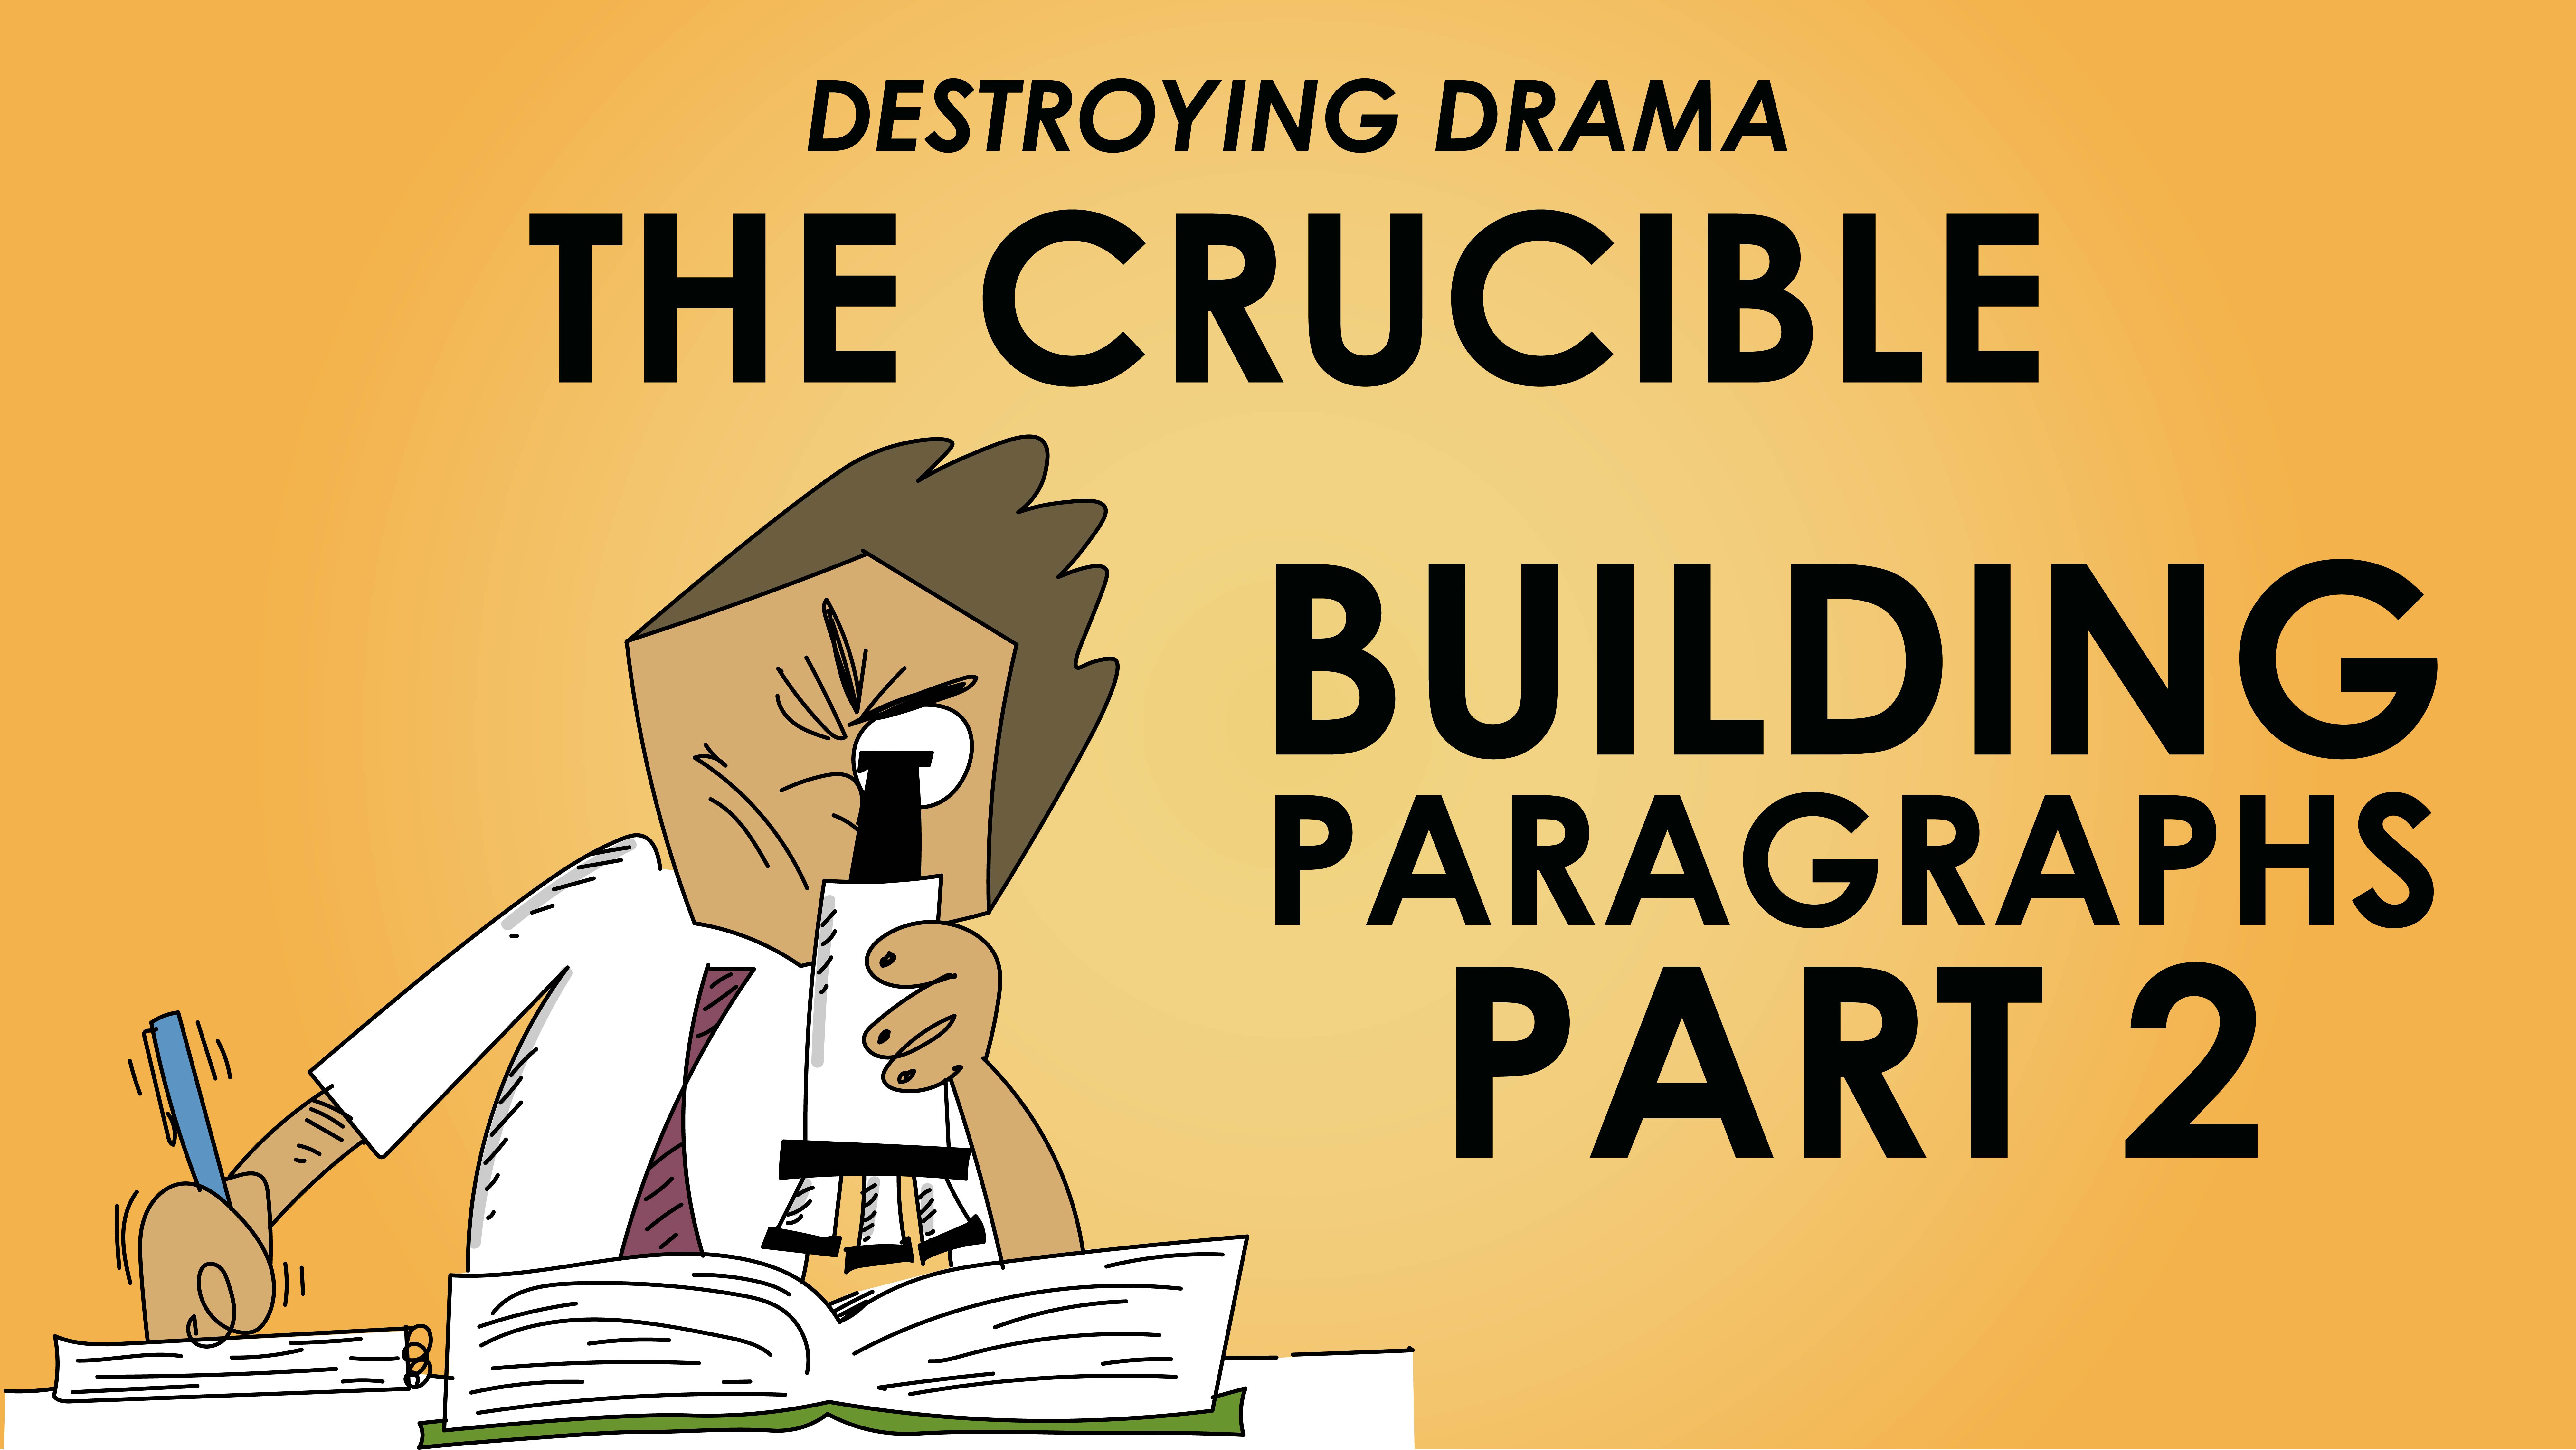 The Crucible - Arthur Miller - Building Paragraphs 2 - Destroying Drama Series